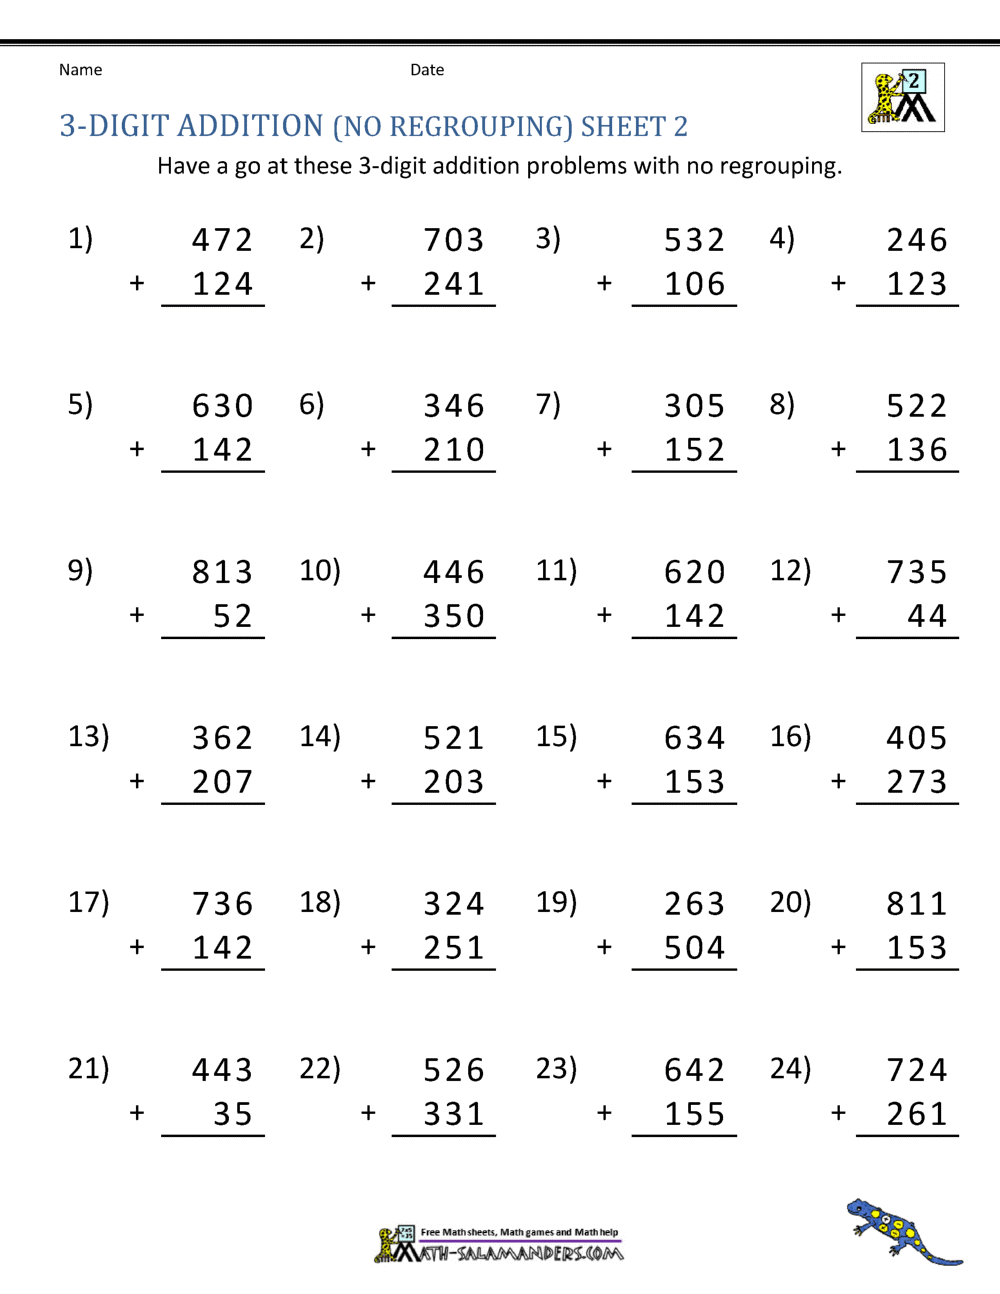 https://www.math-salamanders.com/image-files/3-digit-addition-no